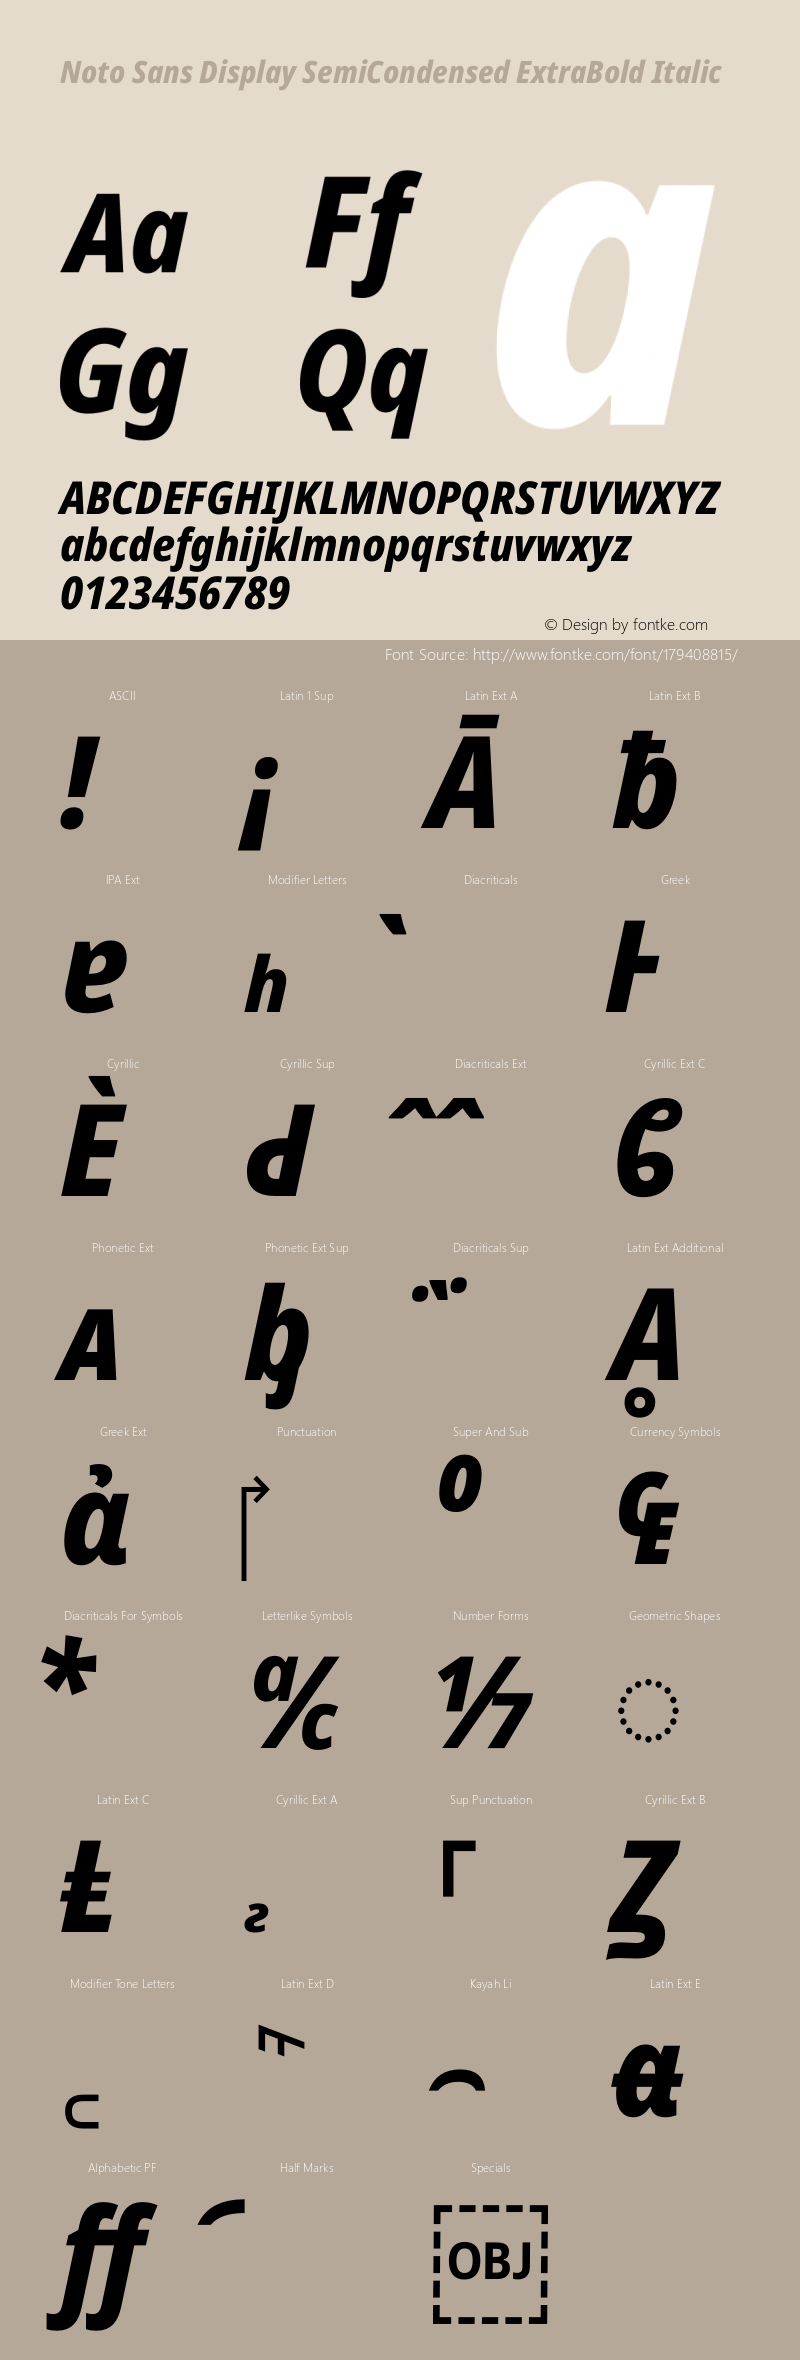 Noto Sans Display SemiCondensed ExtraBold Italic Version 2.004图片样张